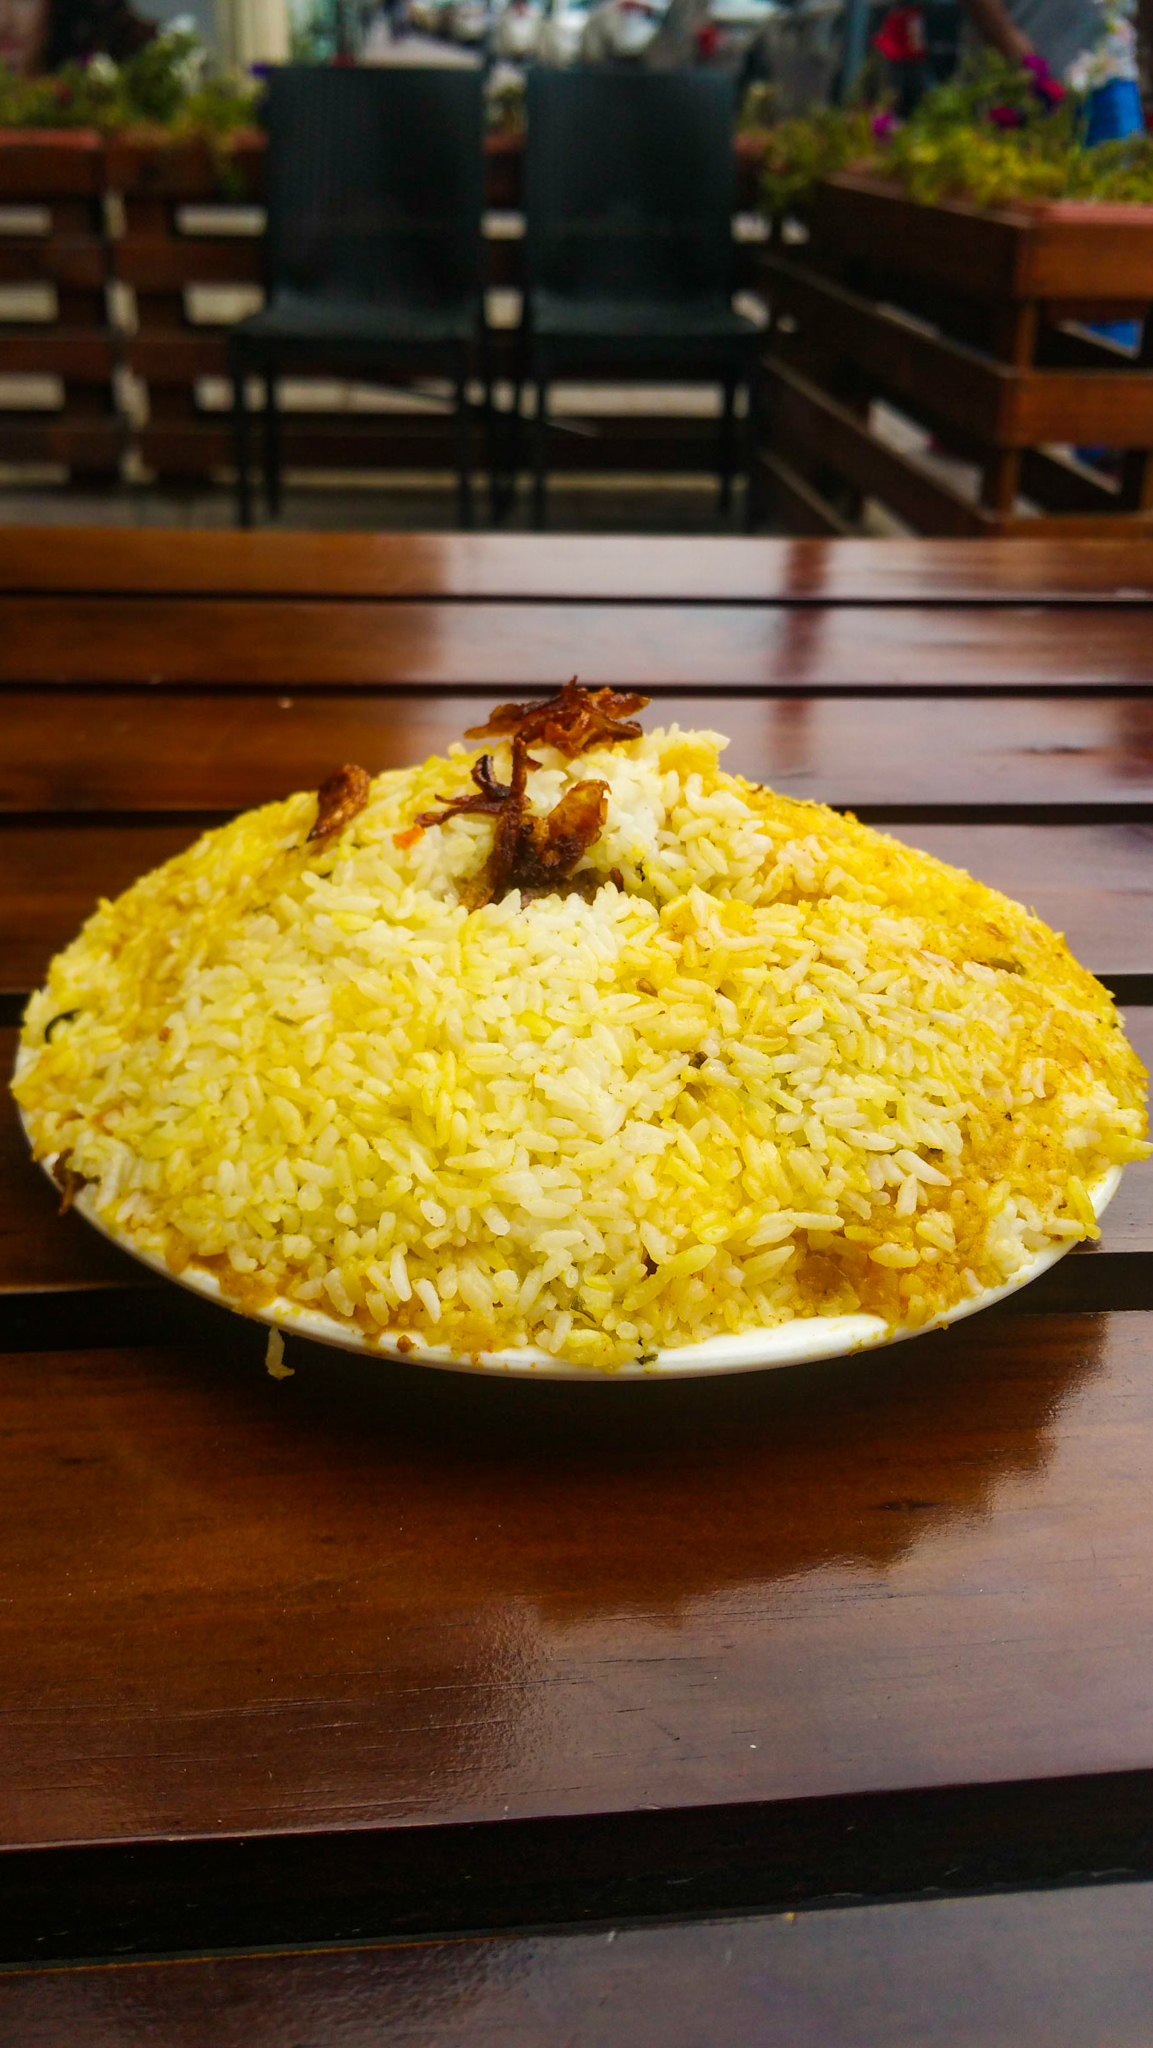 The Best Kerala Restaurant In Karama | Places To Eat In Dubai